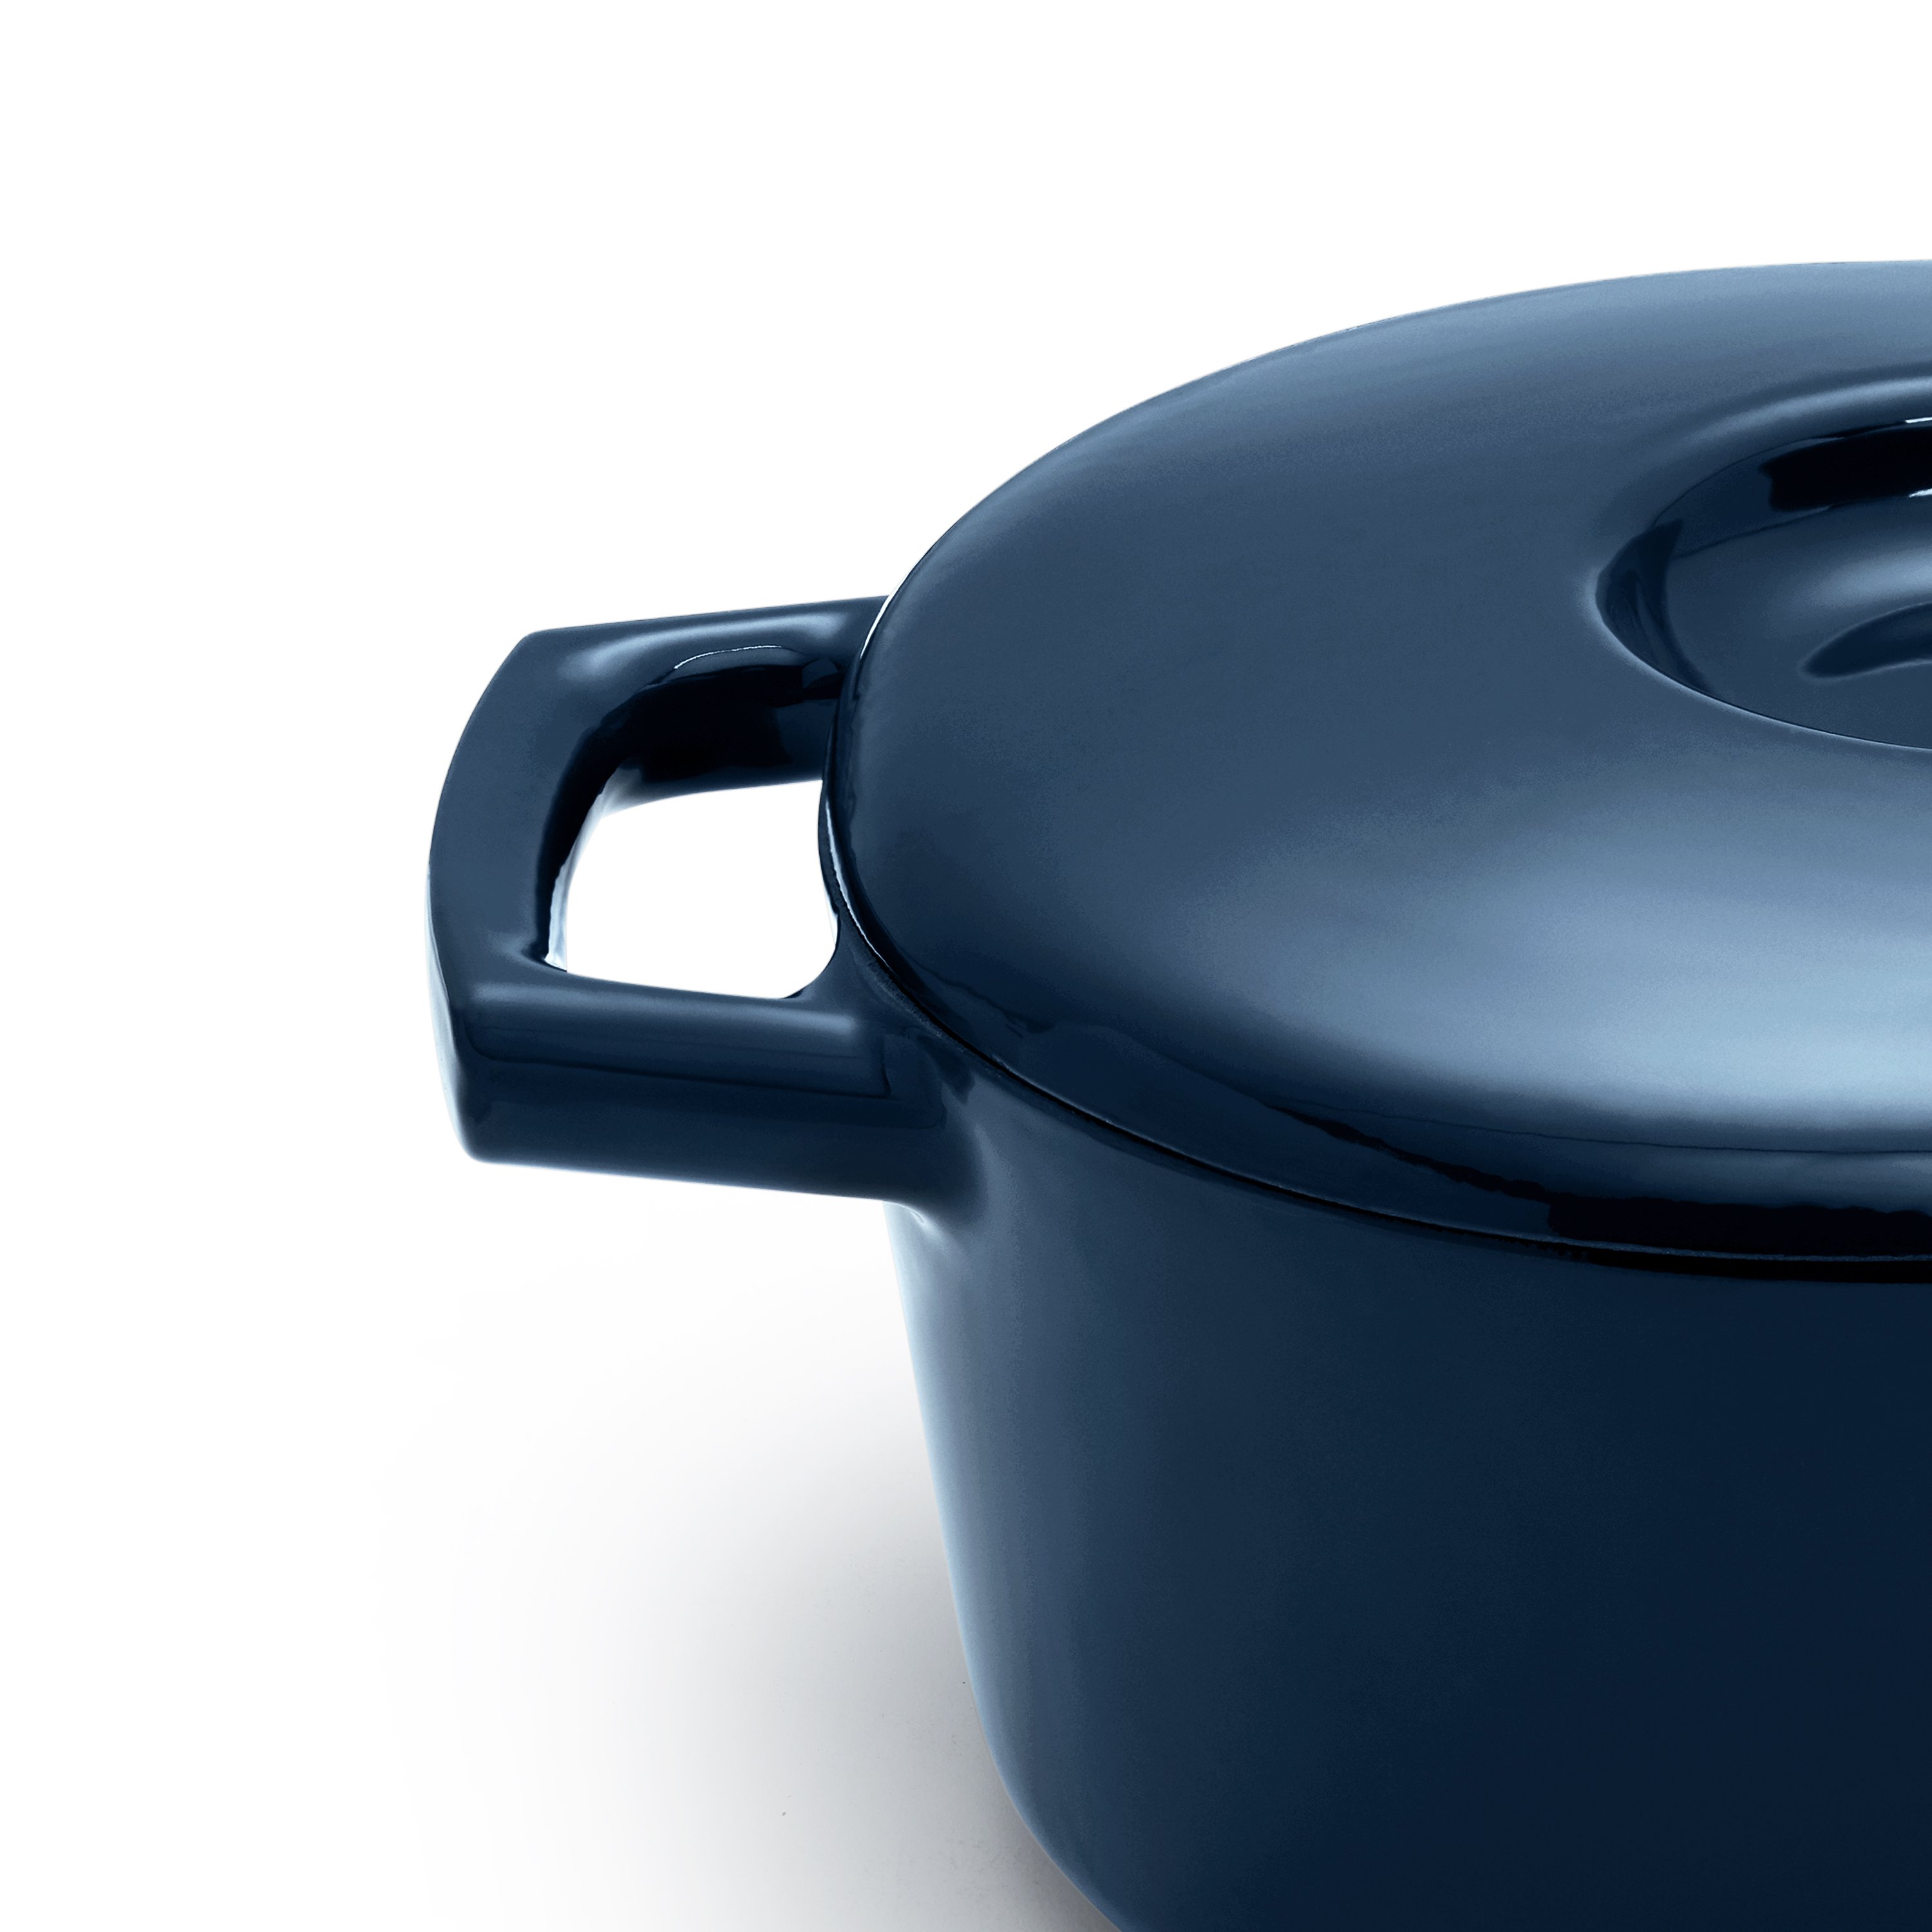 IMUSA Enamel Stock Pot, Blue - Shop Stock Pots & Sauce Pans at H-E-B